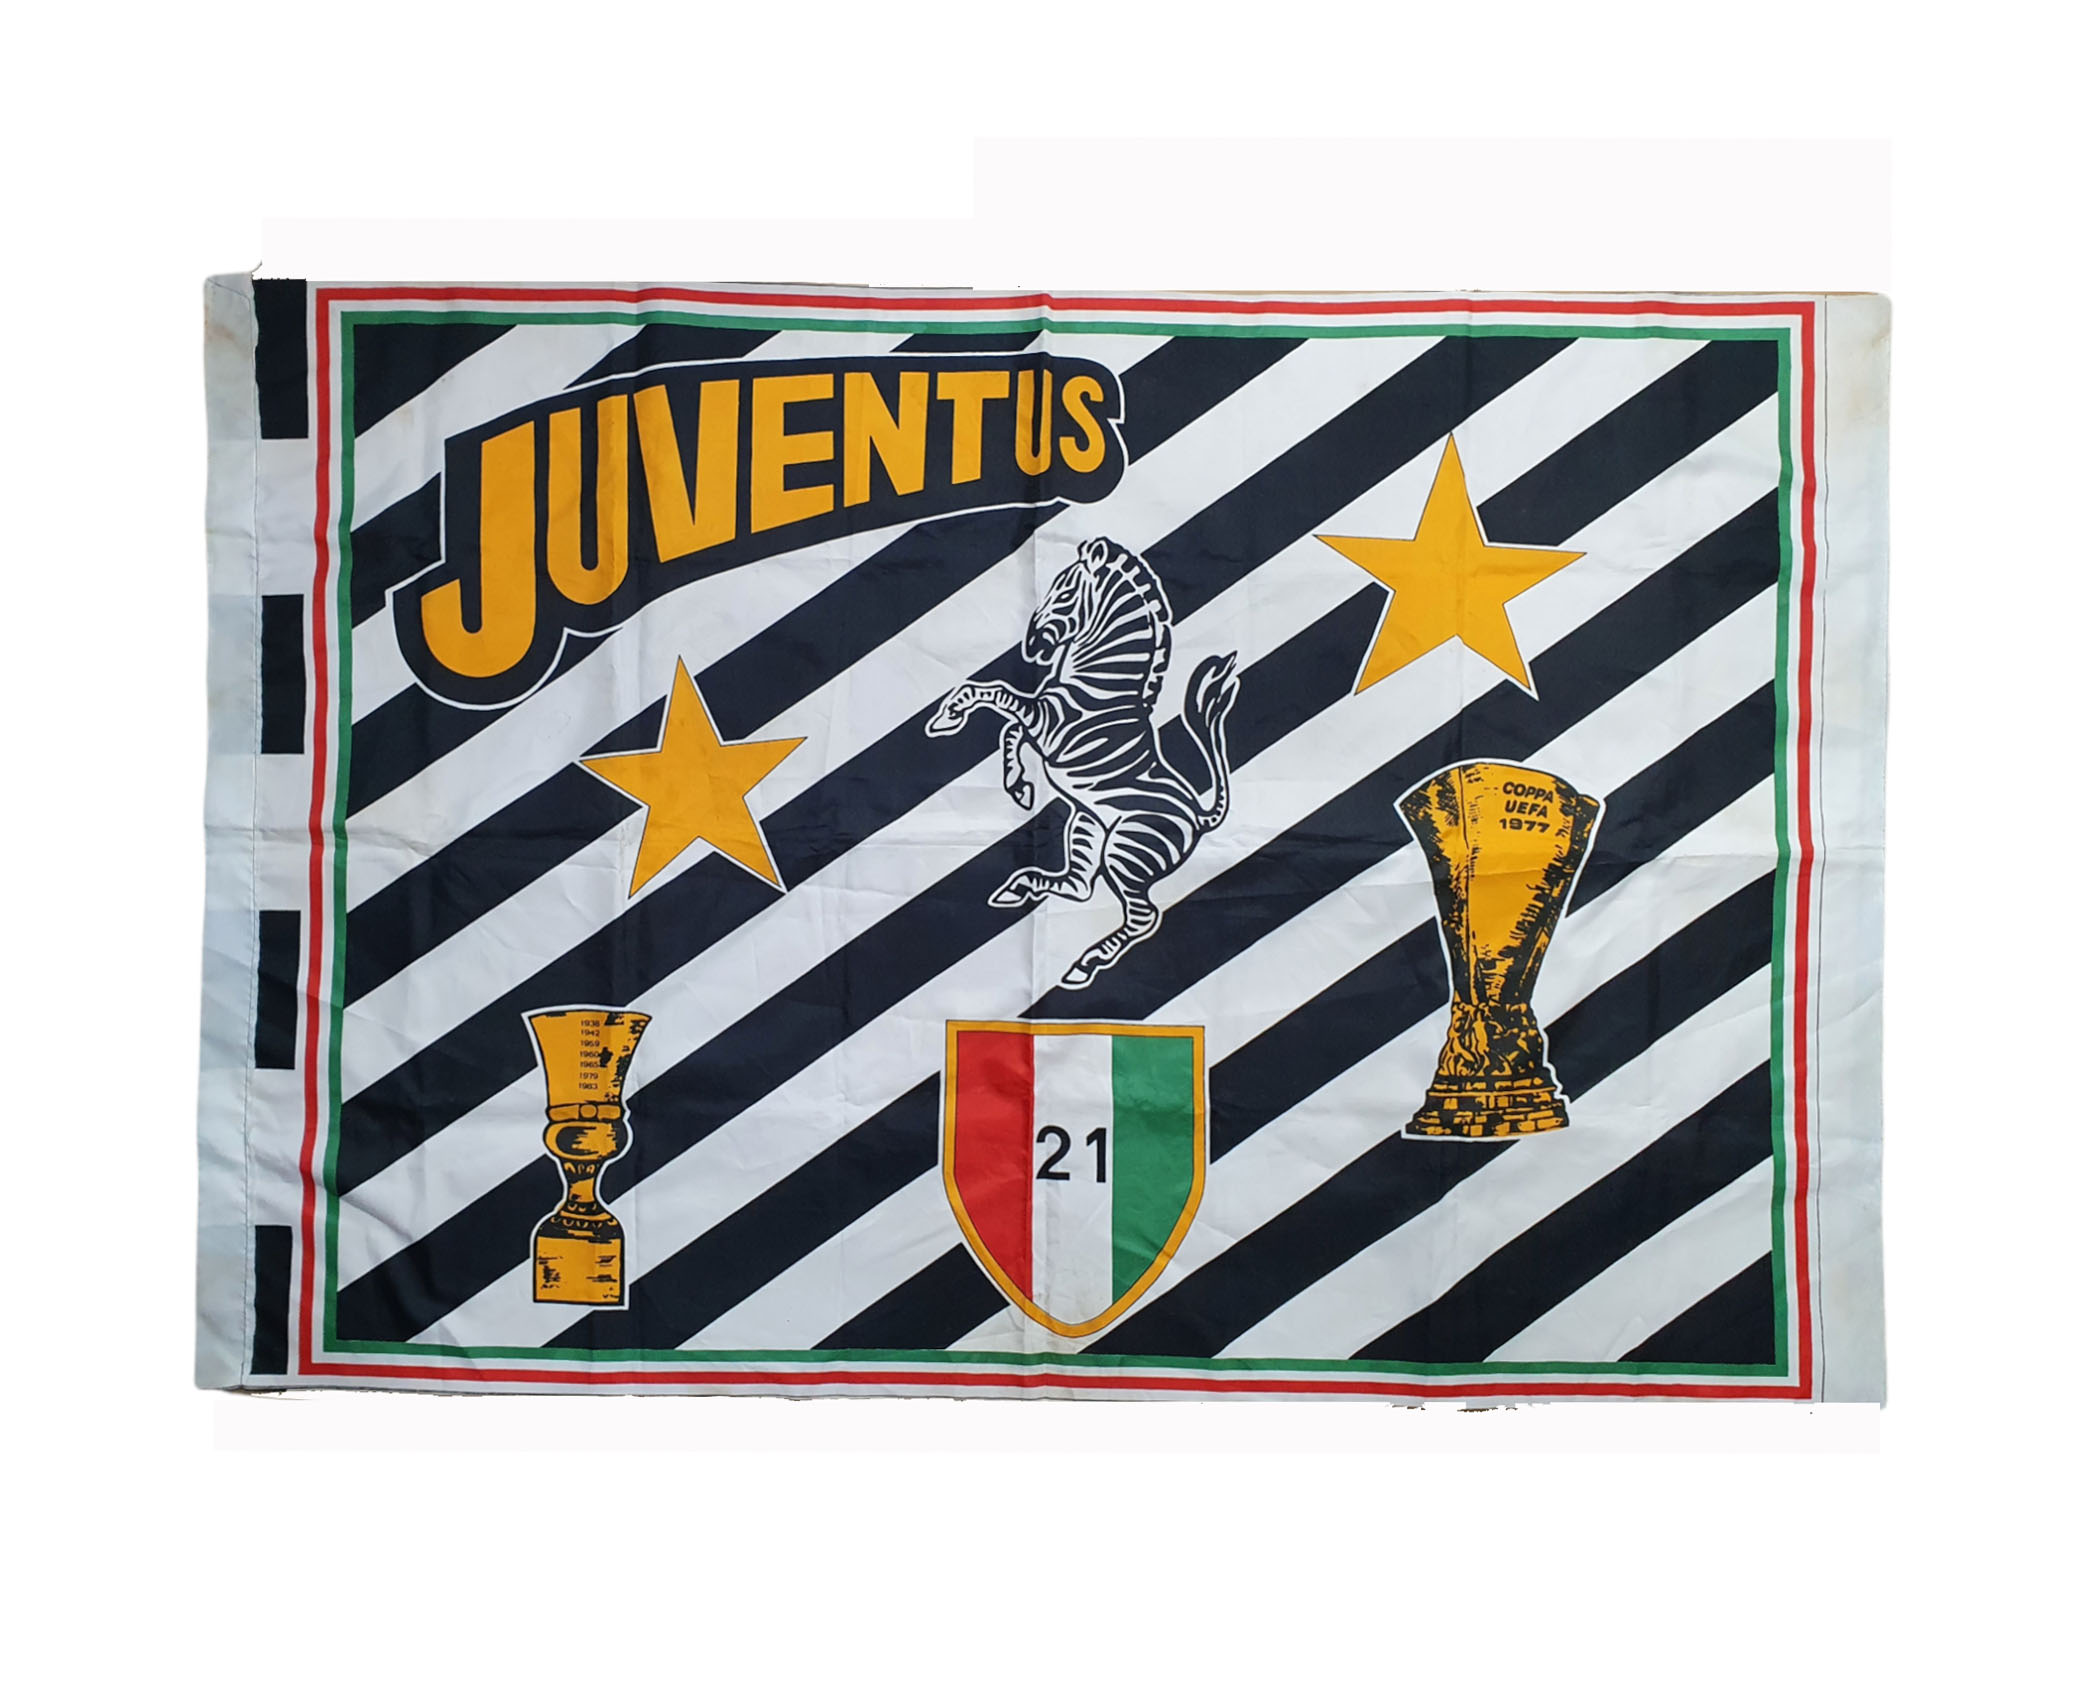 Juventus bandiera 1983-84 Scudetto